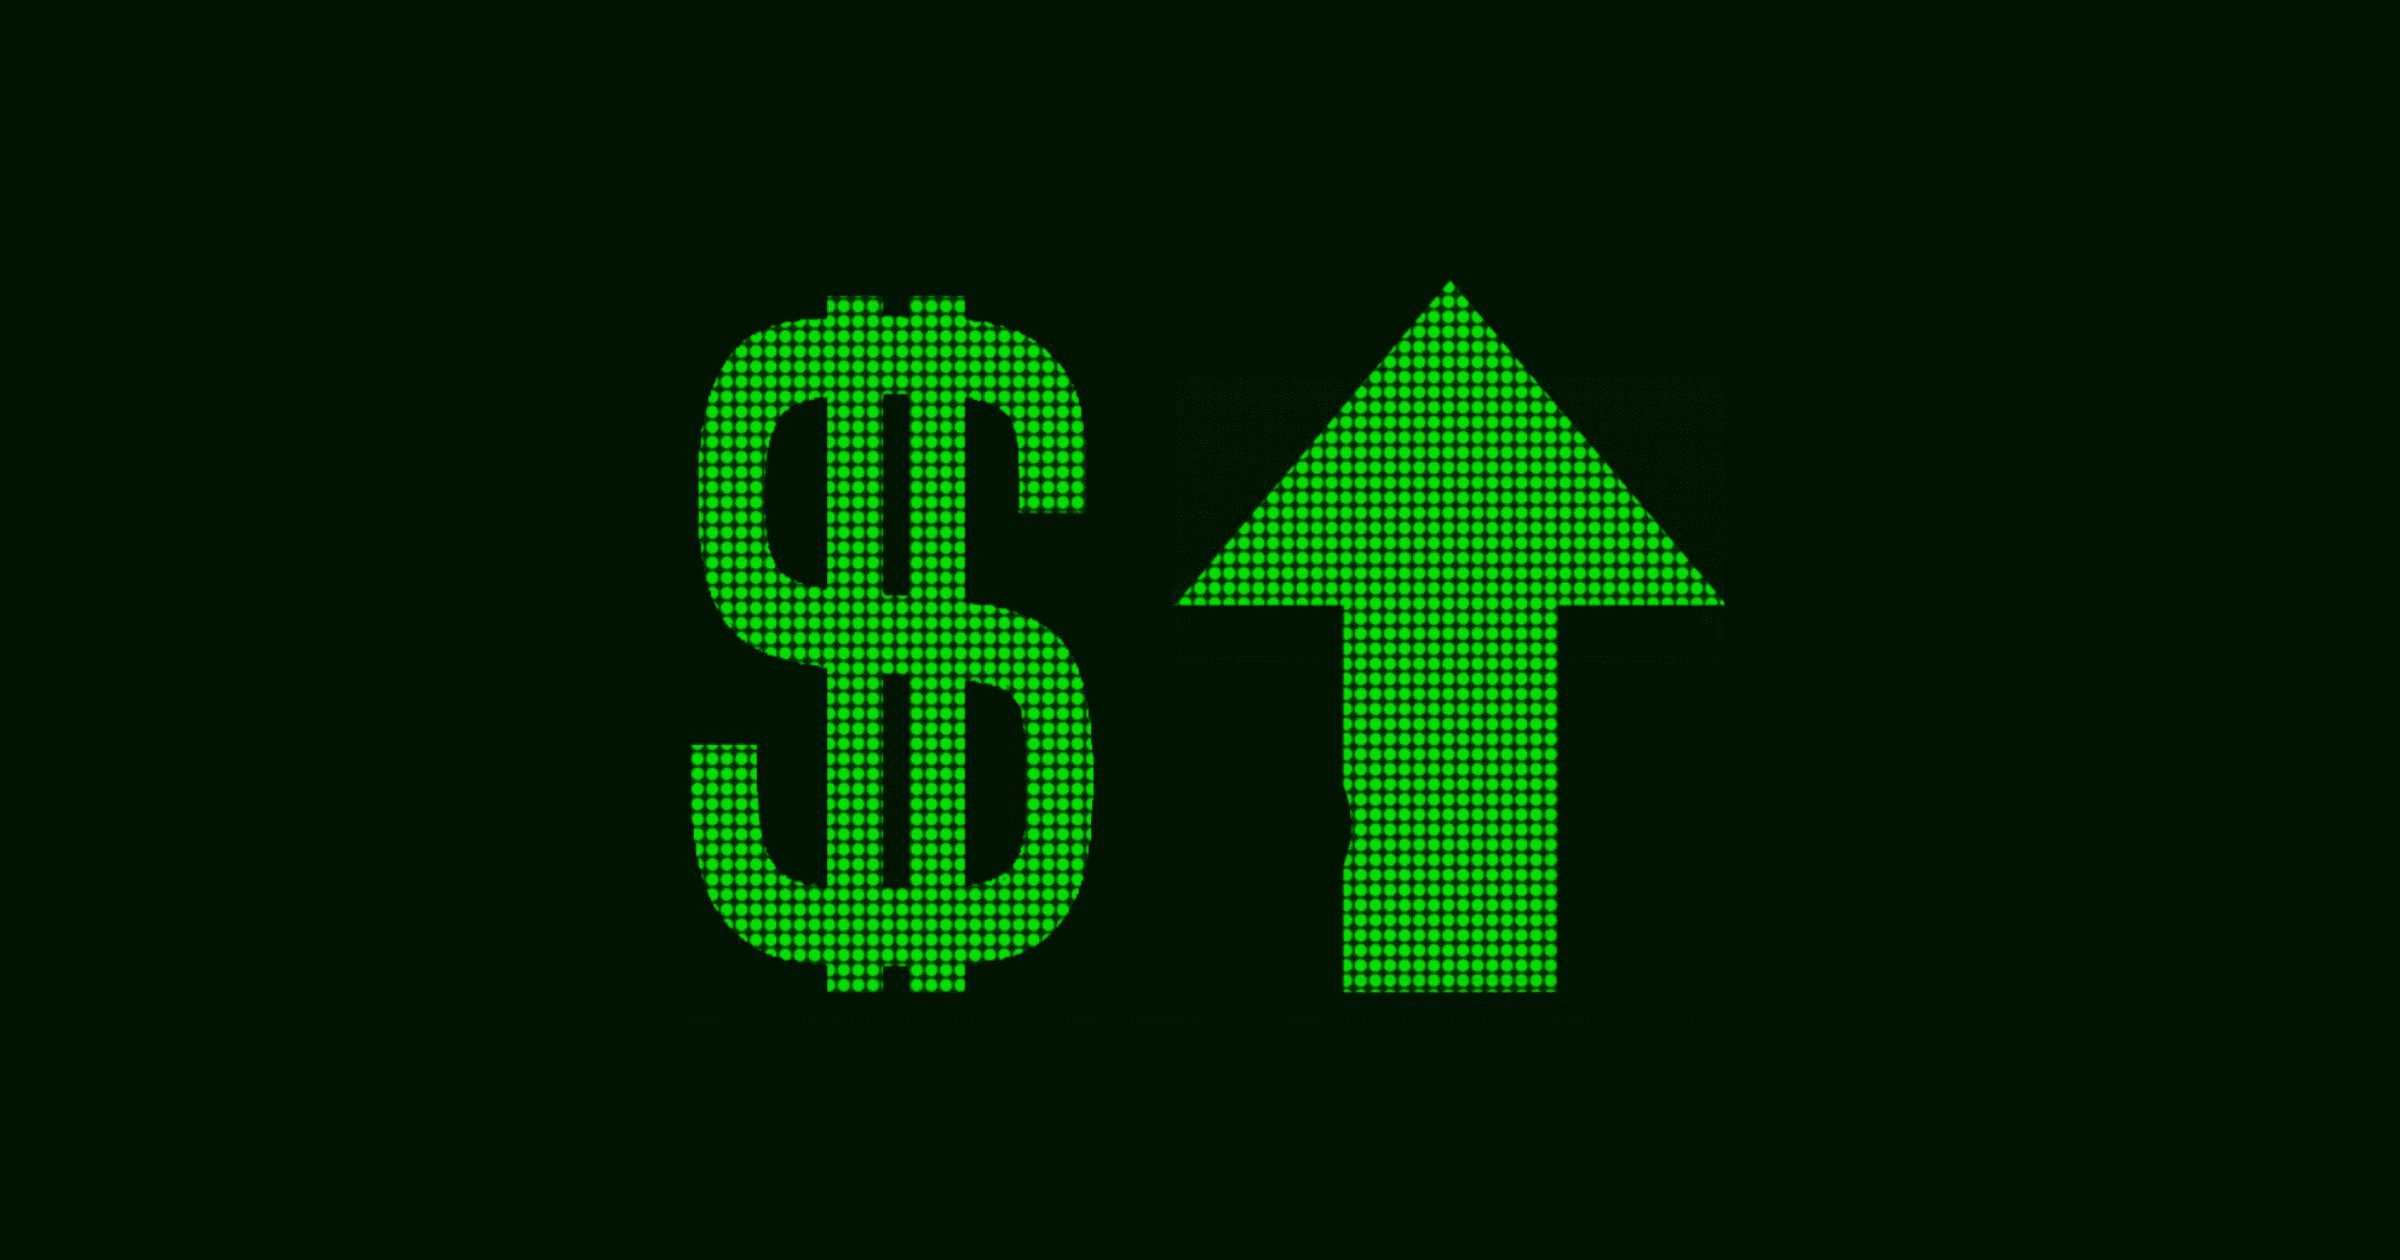 Курс доллара вырос почти на один сом — до 81.3-82.3 сома